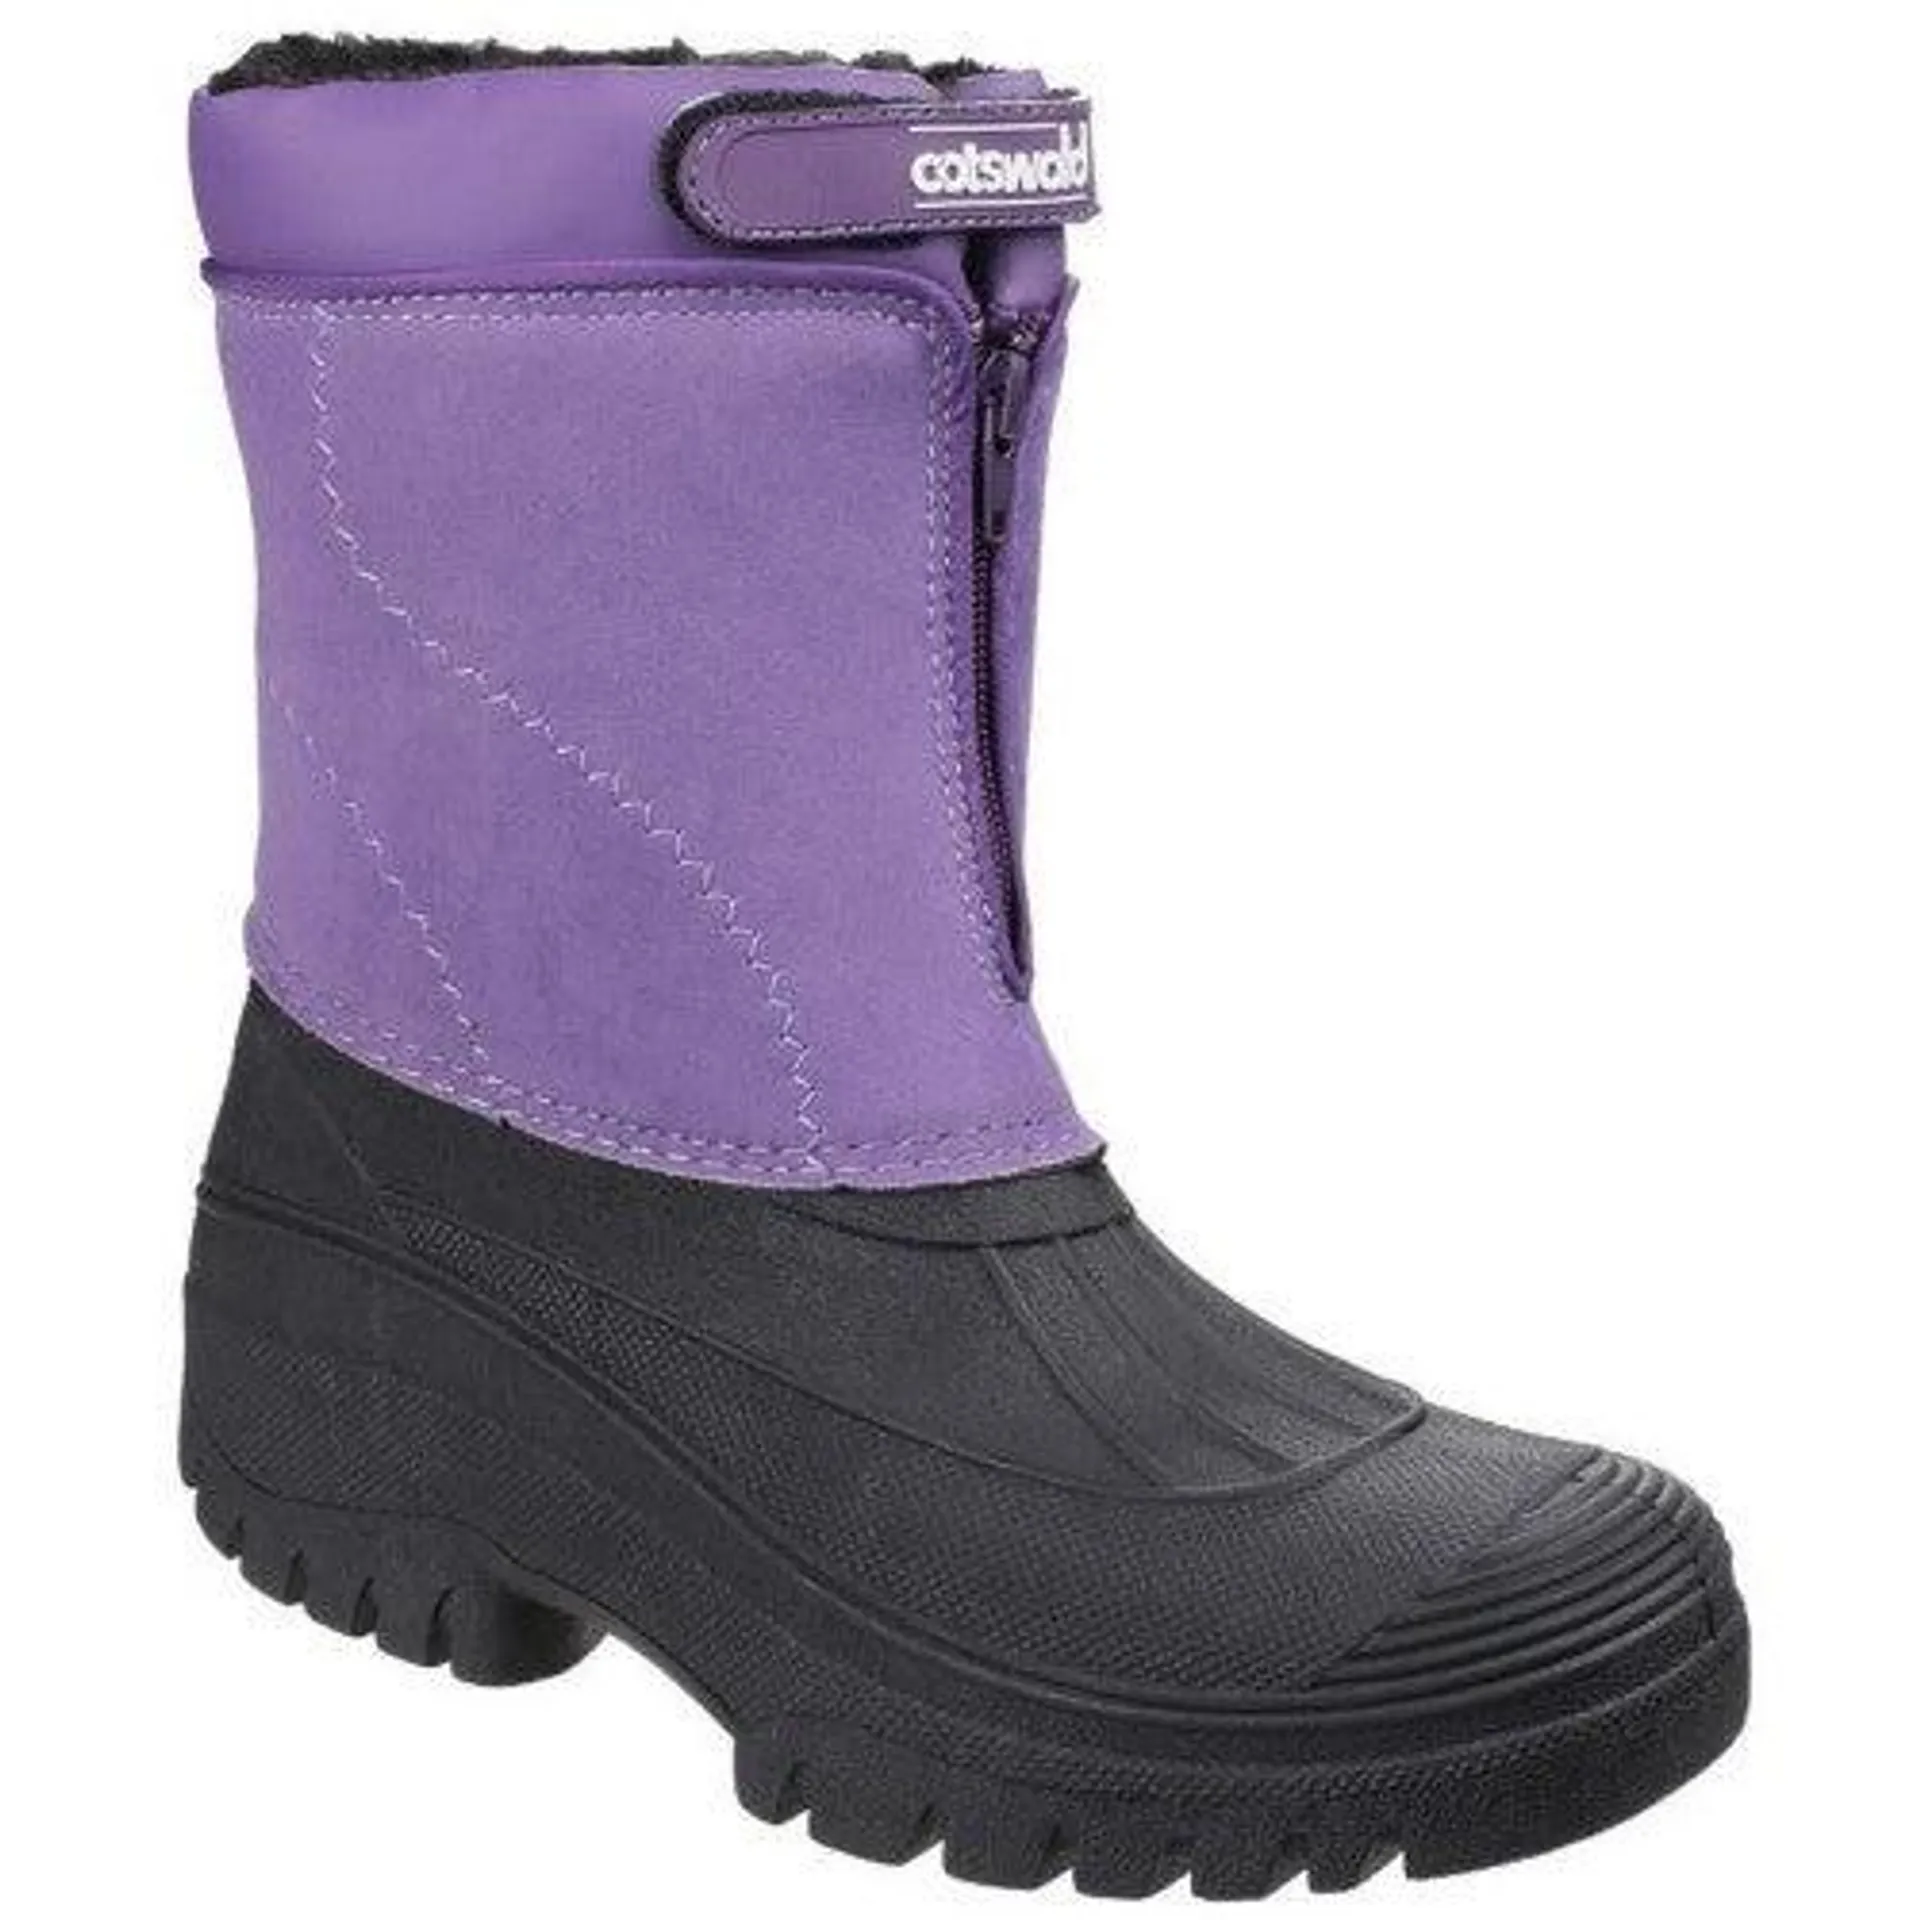 Cotswold Venture Waterproof Ladies Boot / Ladies Boots / Textile/Weather Wellingtons